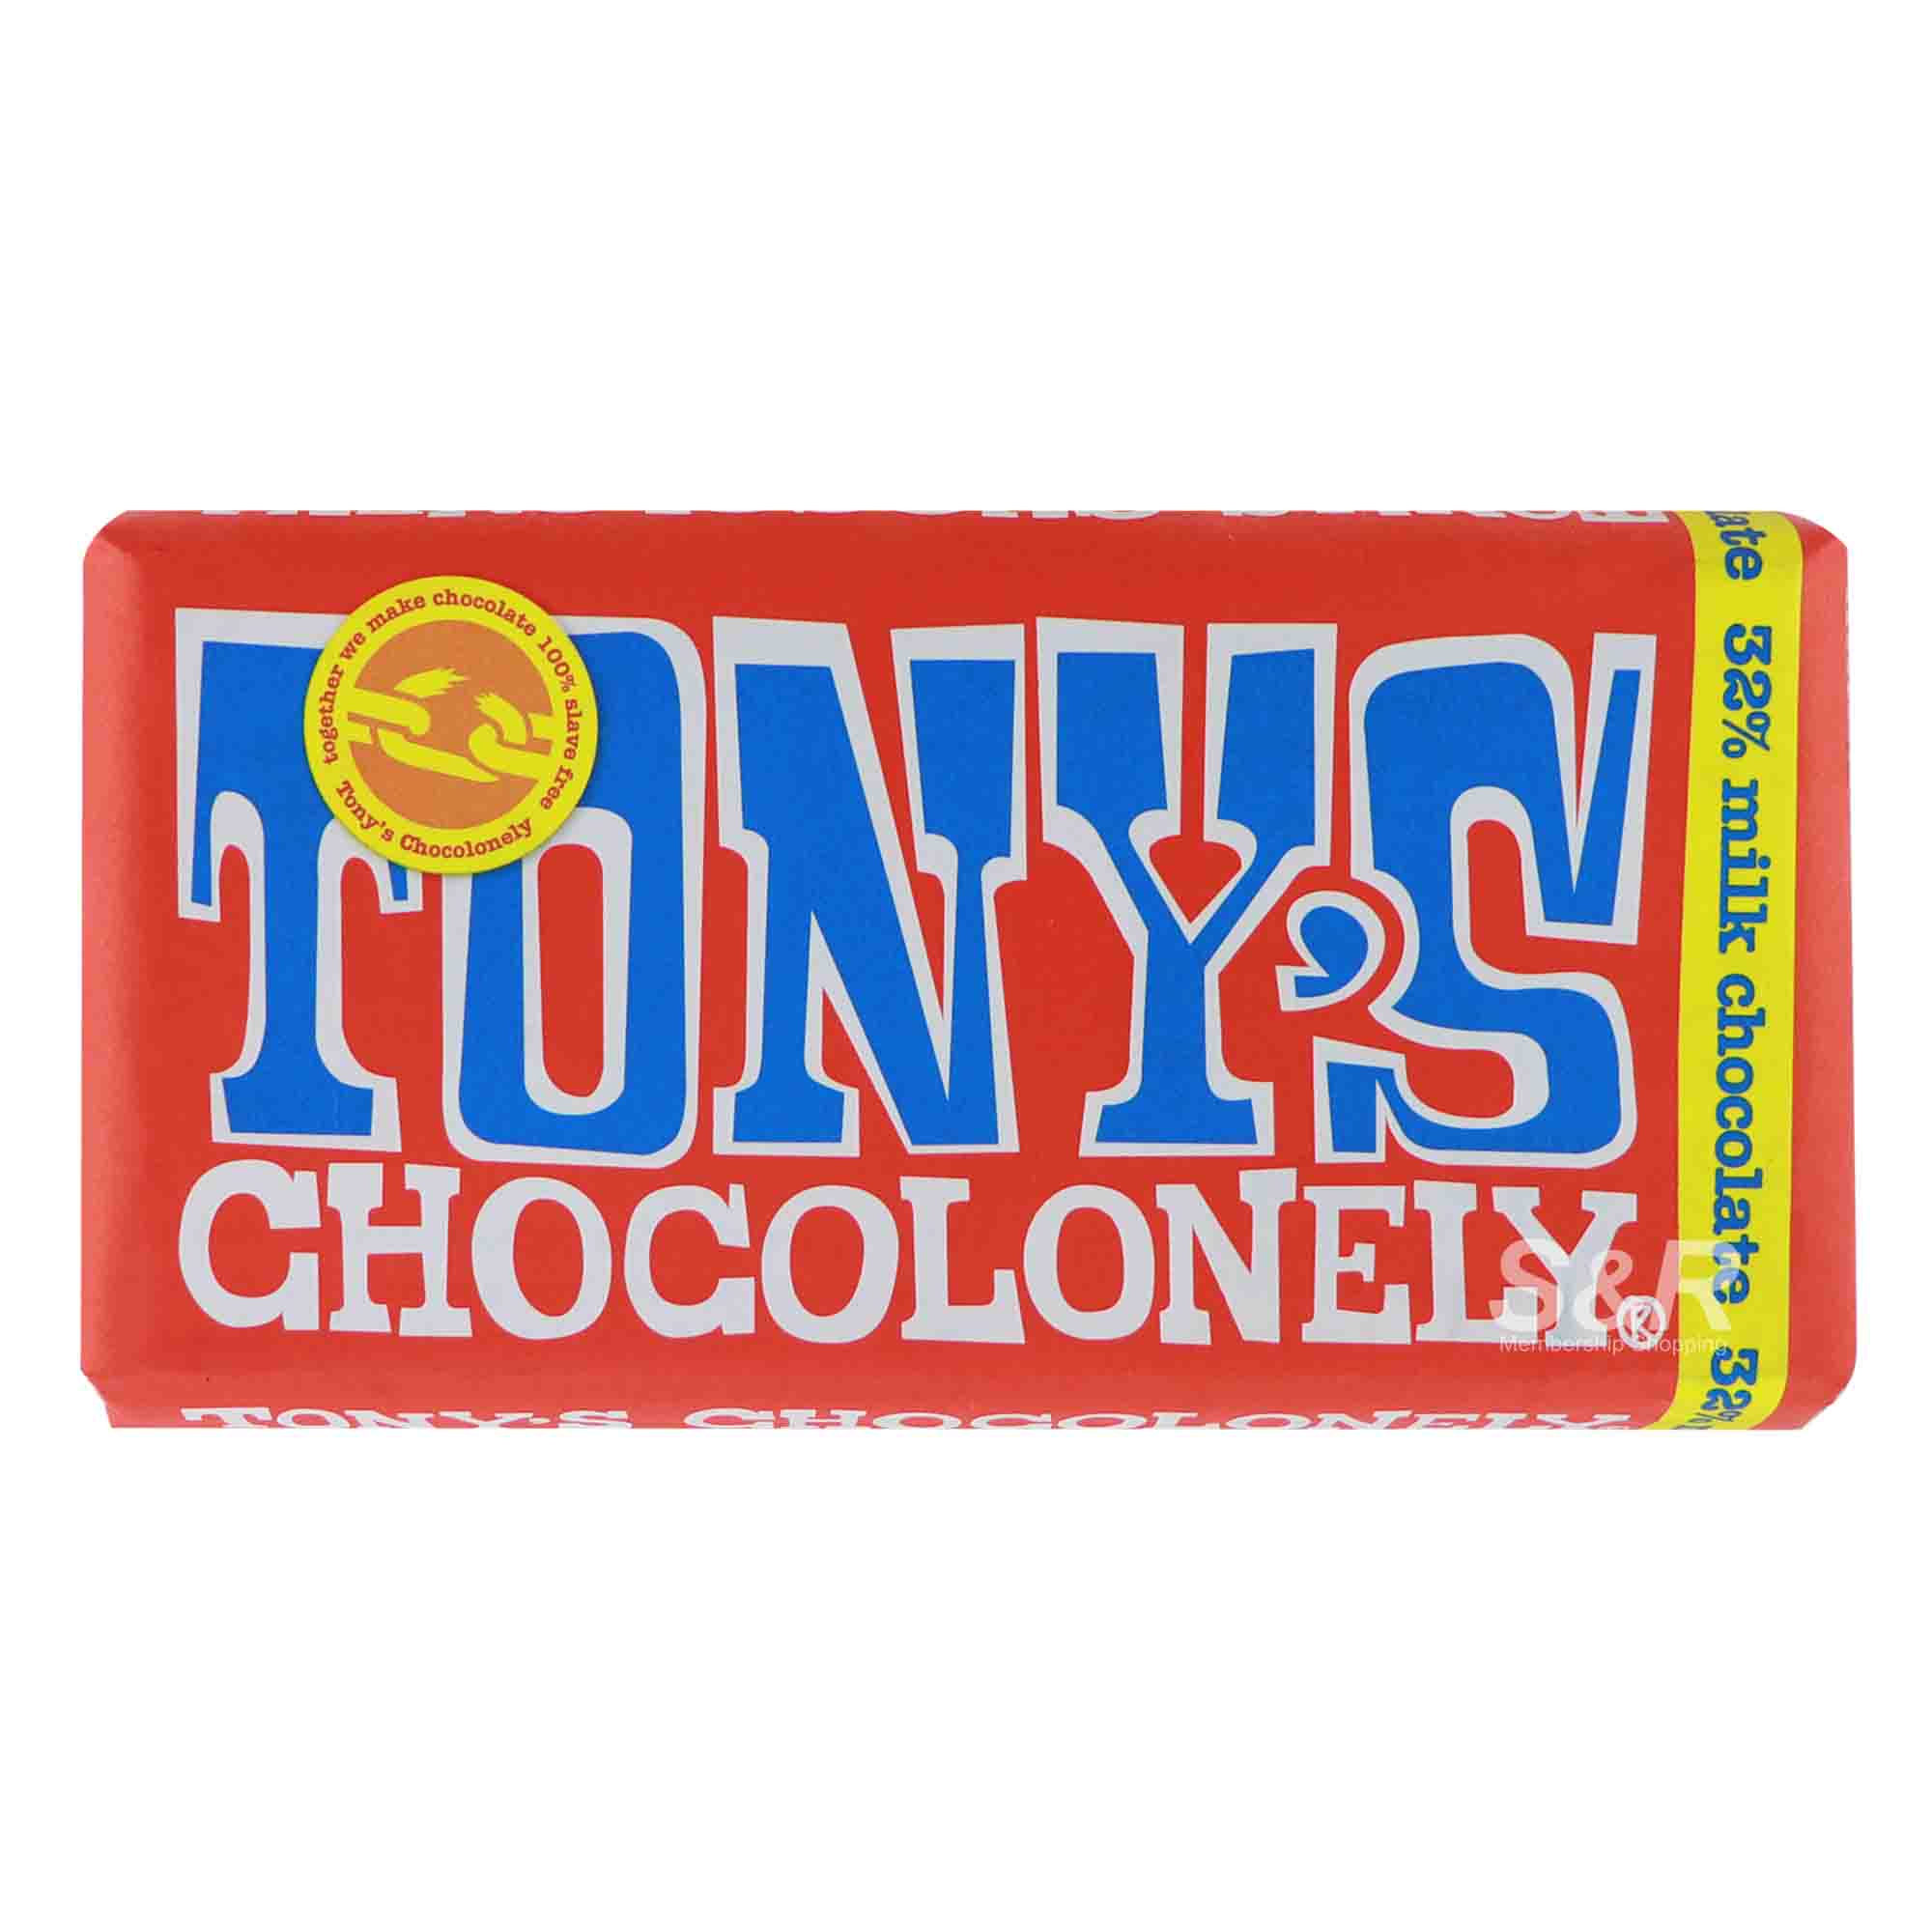 Tony's Chocolonely 32% Milk Chocolate Bar 180g